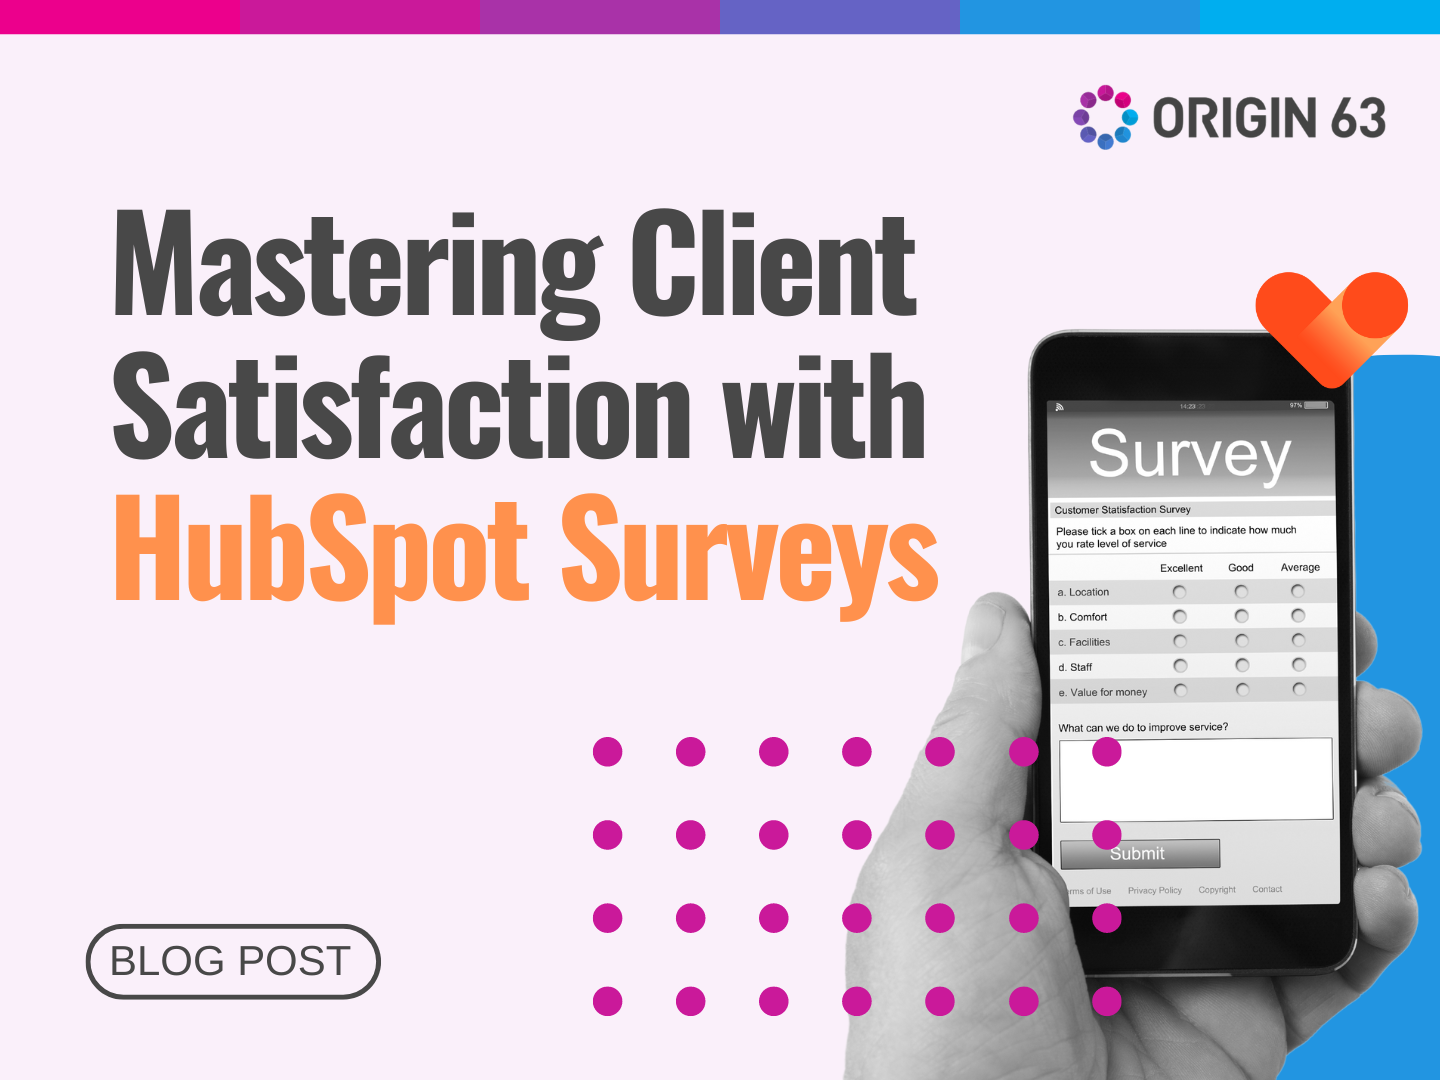 Boost customer loyalty using HubSpot's powerful survey tools. 